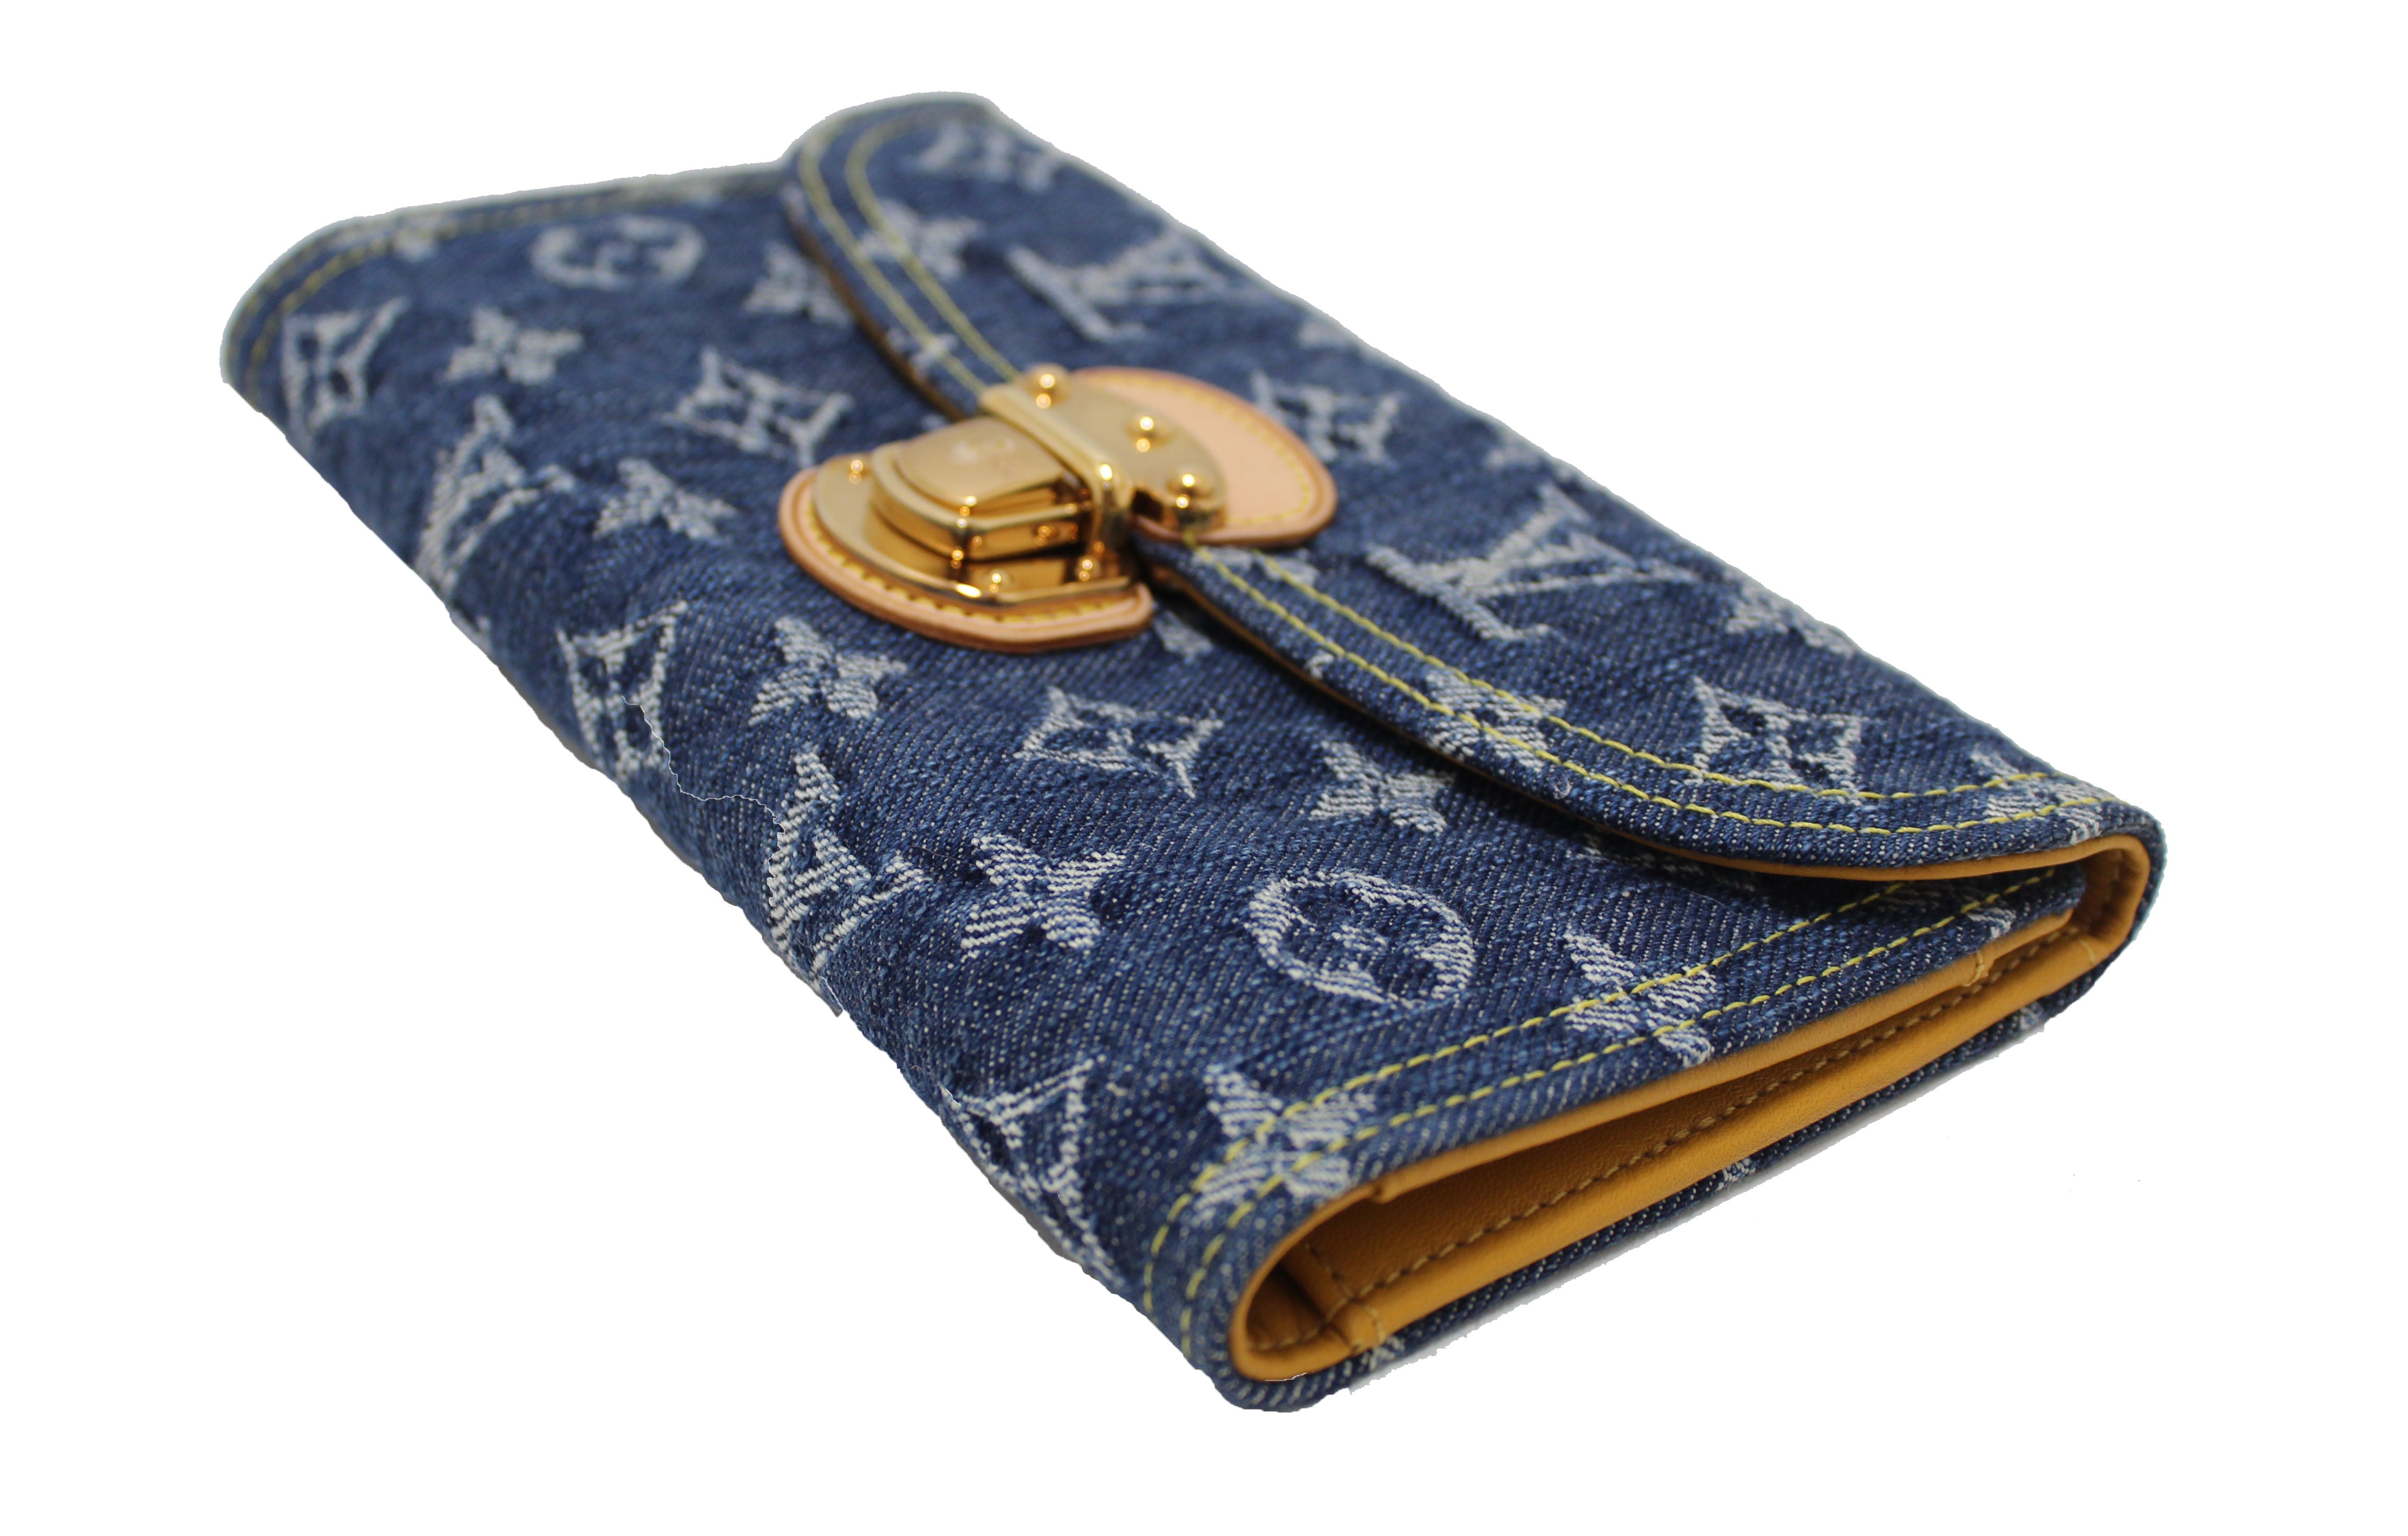 Louis Vuitton Amelia Beige Leather Wallet (Pre-Owned)